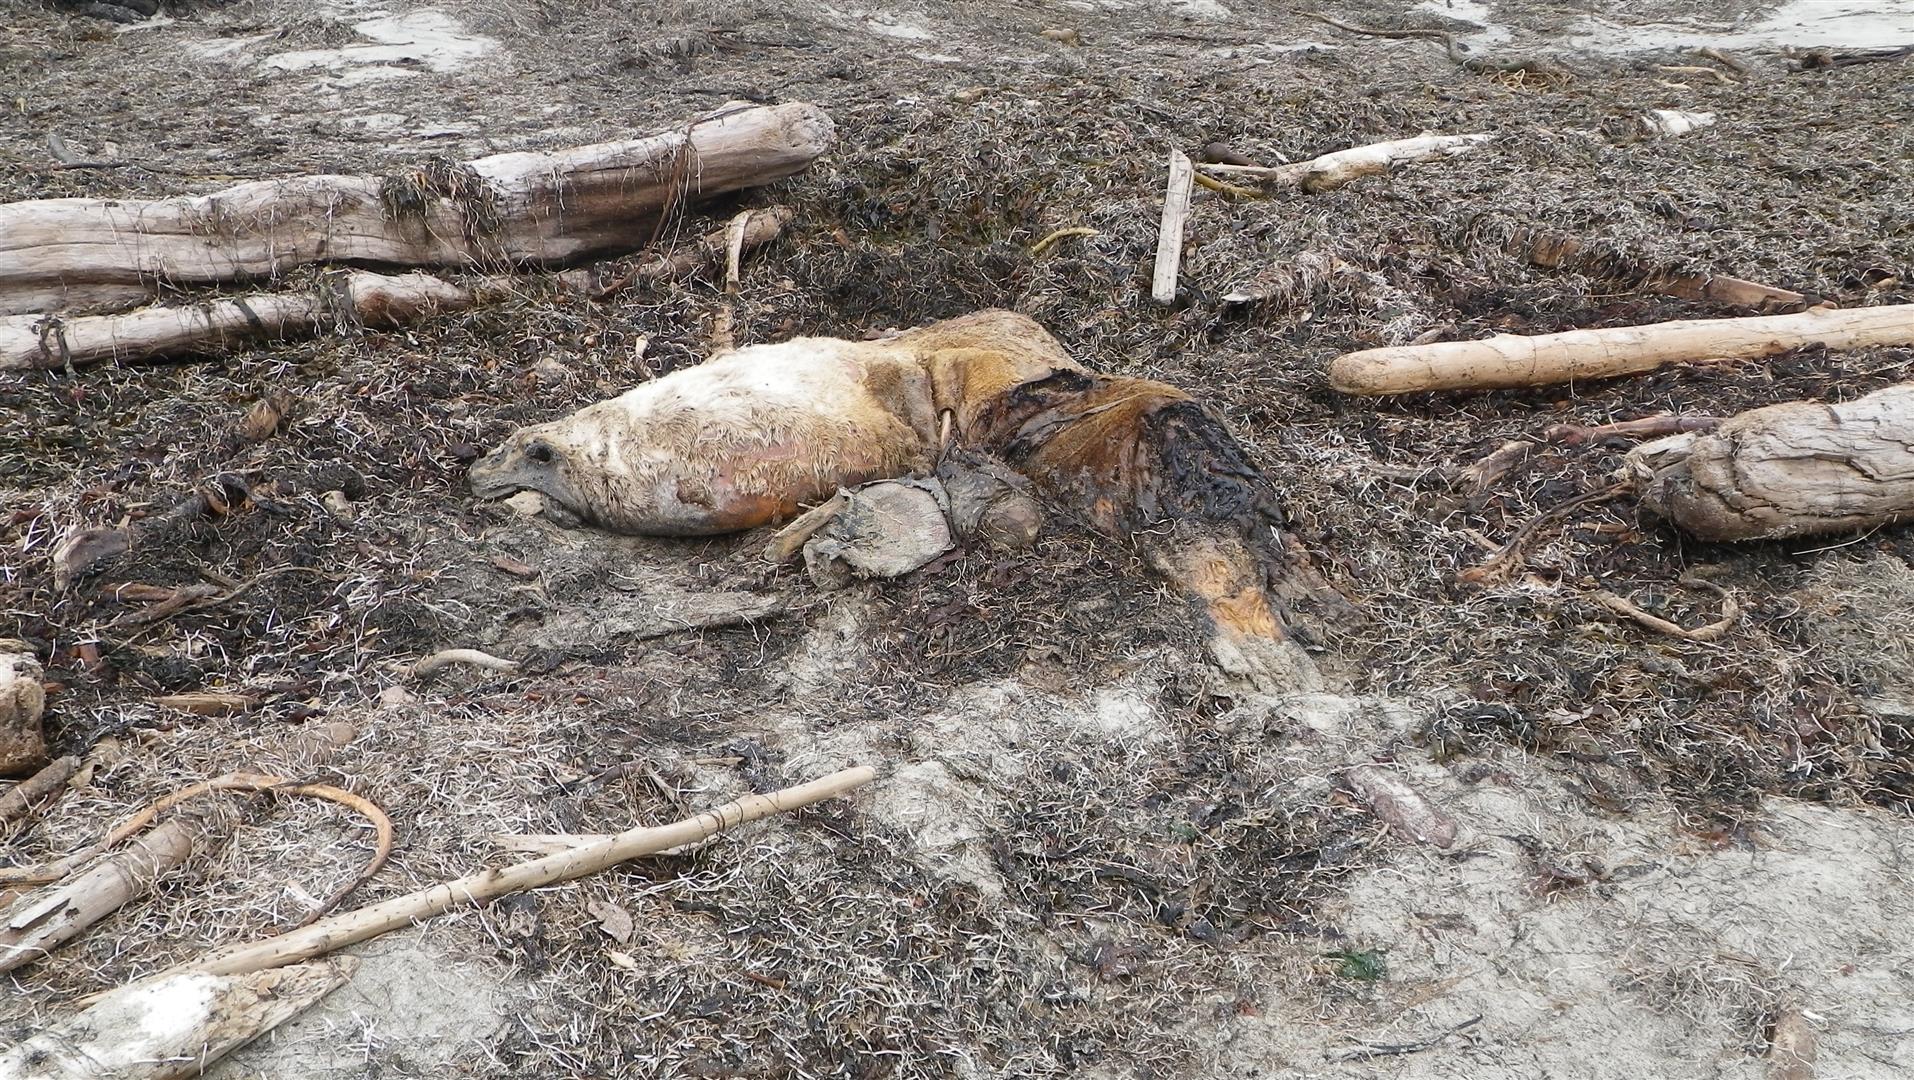 Wolf was feeding on the dead sea lion